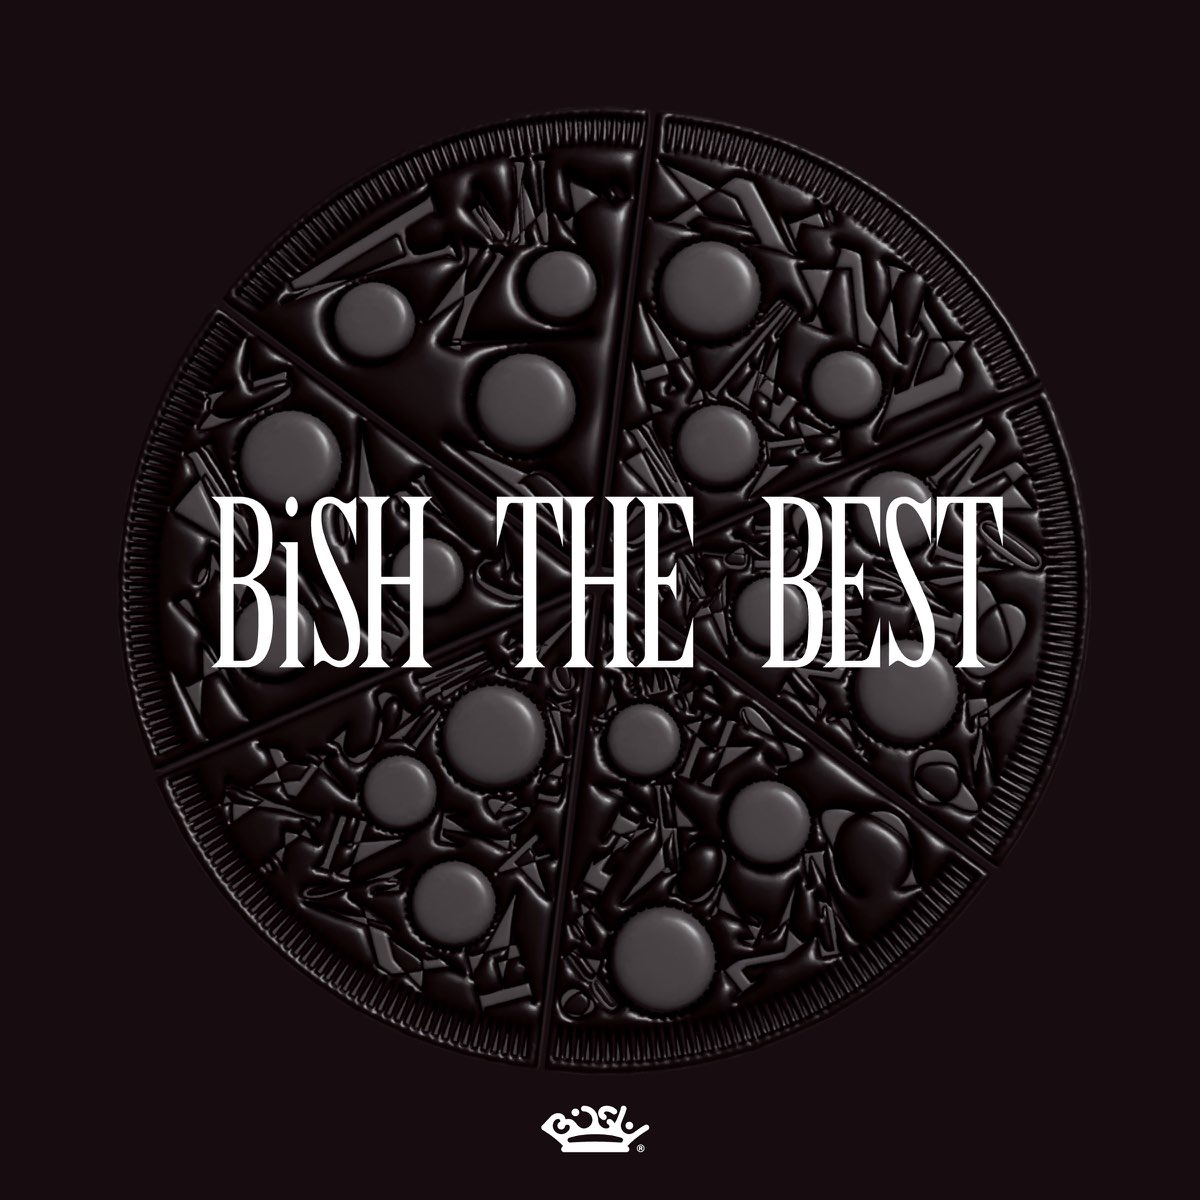 BiSH THE BEST - Album by BiSH - Apple Music